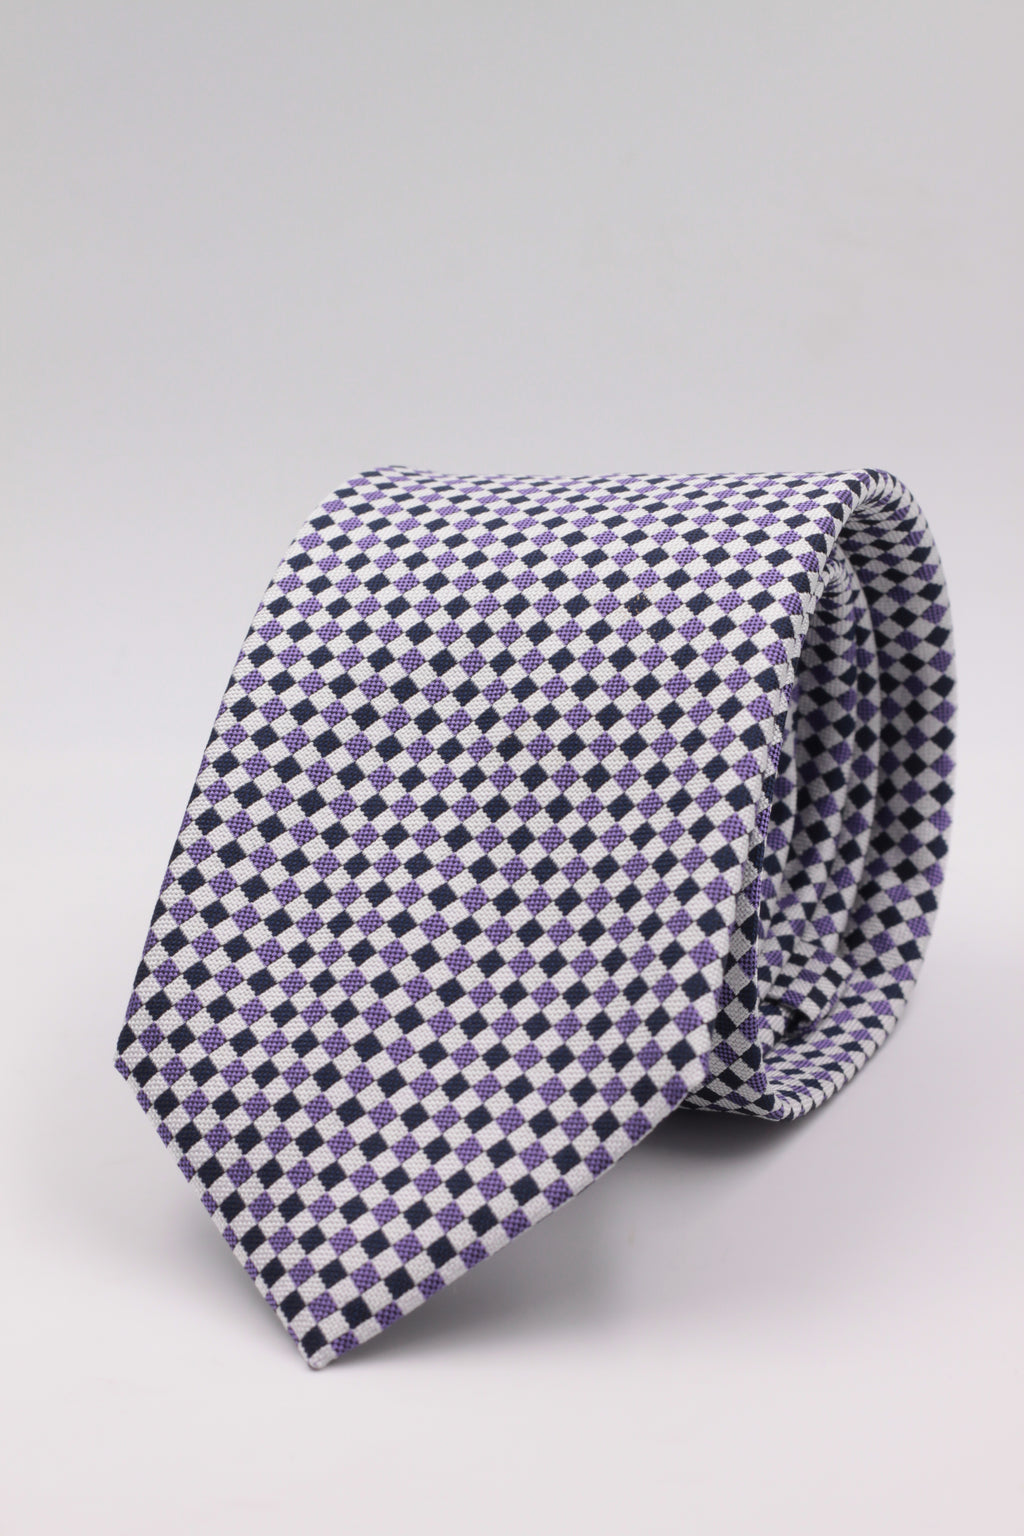 Cruciani & Bella 100% Woven Jacquard Silk Italian Fabric Unlined Dark Blue and Purple Optical tie Handmade in italy 8 x 150 cm